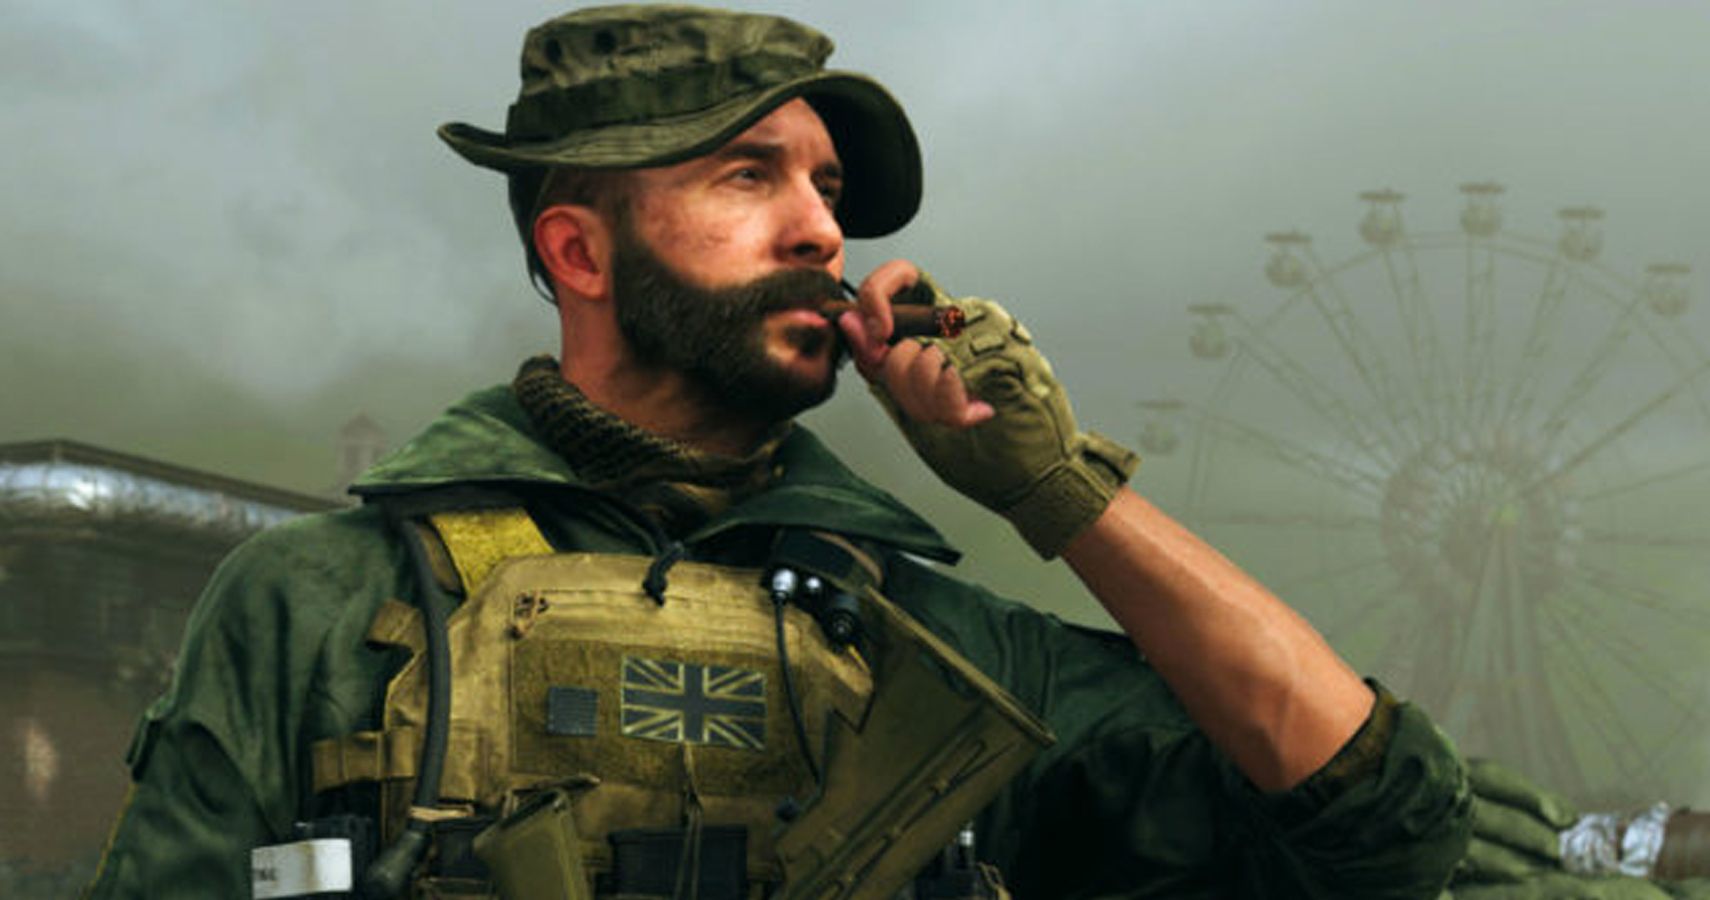 Modern Warfare Heres Everything New In Season 4